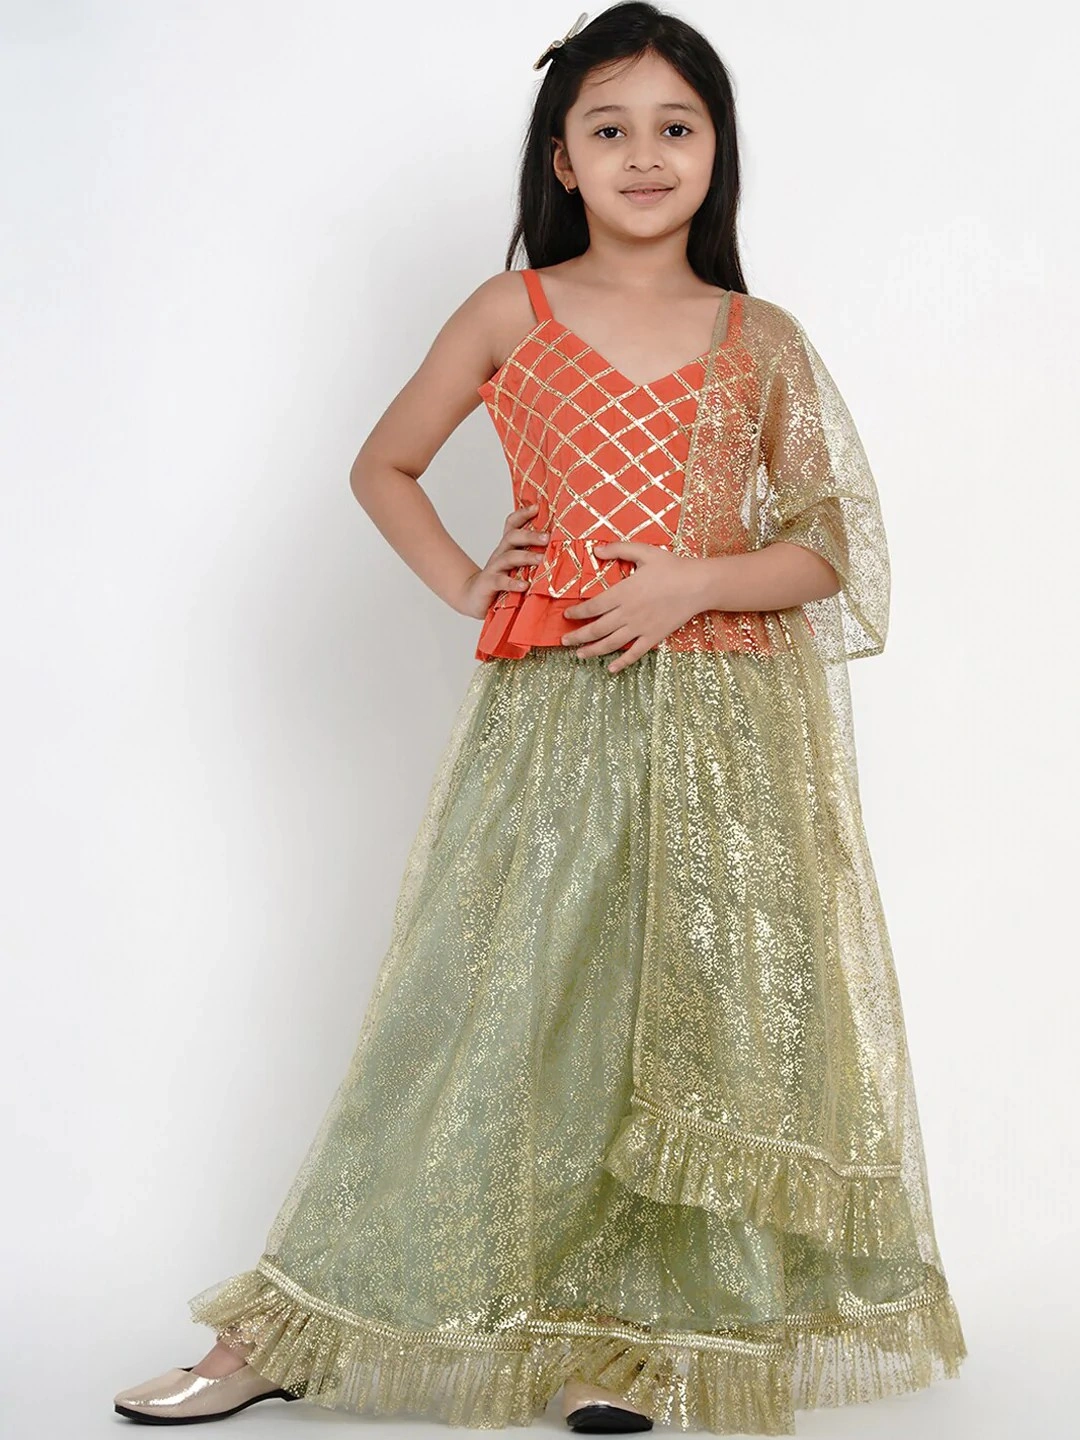 Bitiya by Bhama Girls Green &amp; Peach-Coloured Embellished Ready to Wear Lehenga &amp; Blouse with Dupatta-BBB166_5-6Y